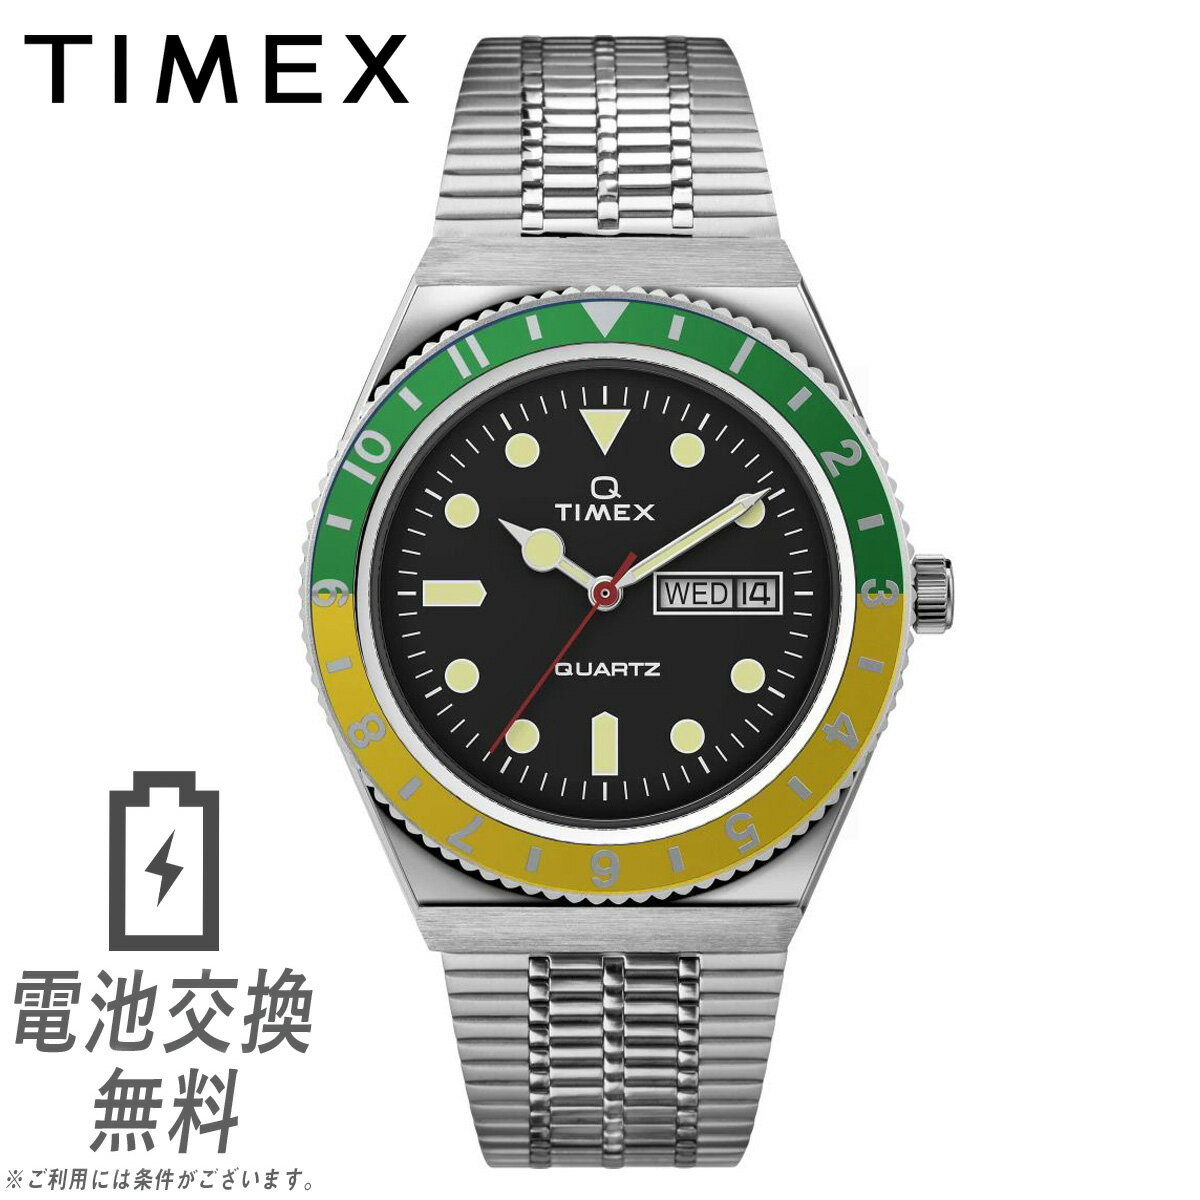 Q TIMEX タイメックス キュー 1979 REISSUE TW2U61000 ダイバースタイル グリーン イエロー 緑 黄色 時計 復刻モデル 曜日 日付 カレンダー アナログ ステンレス メンズ 男性 ボーイズサイズ ユニセックス 腕時計 レトロ